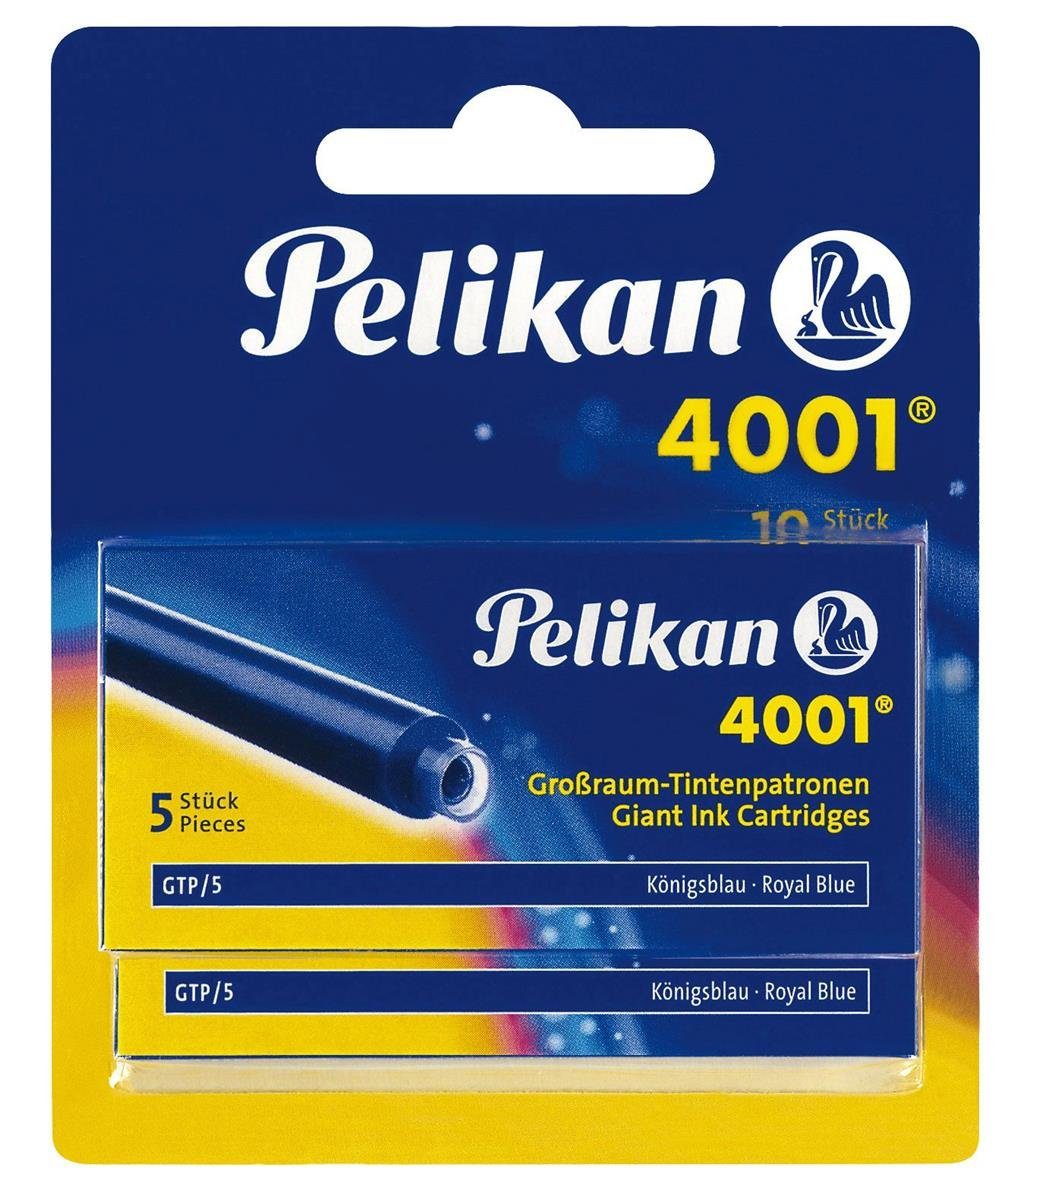 Schreibtischunterlage Pelikan 4001 Großraum-Tintenpatronen GTP/5/2/B Pelikan